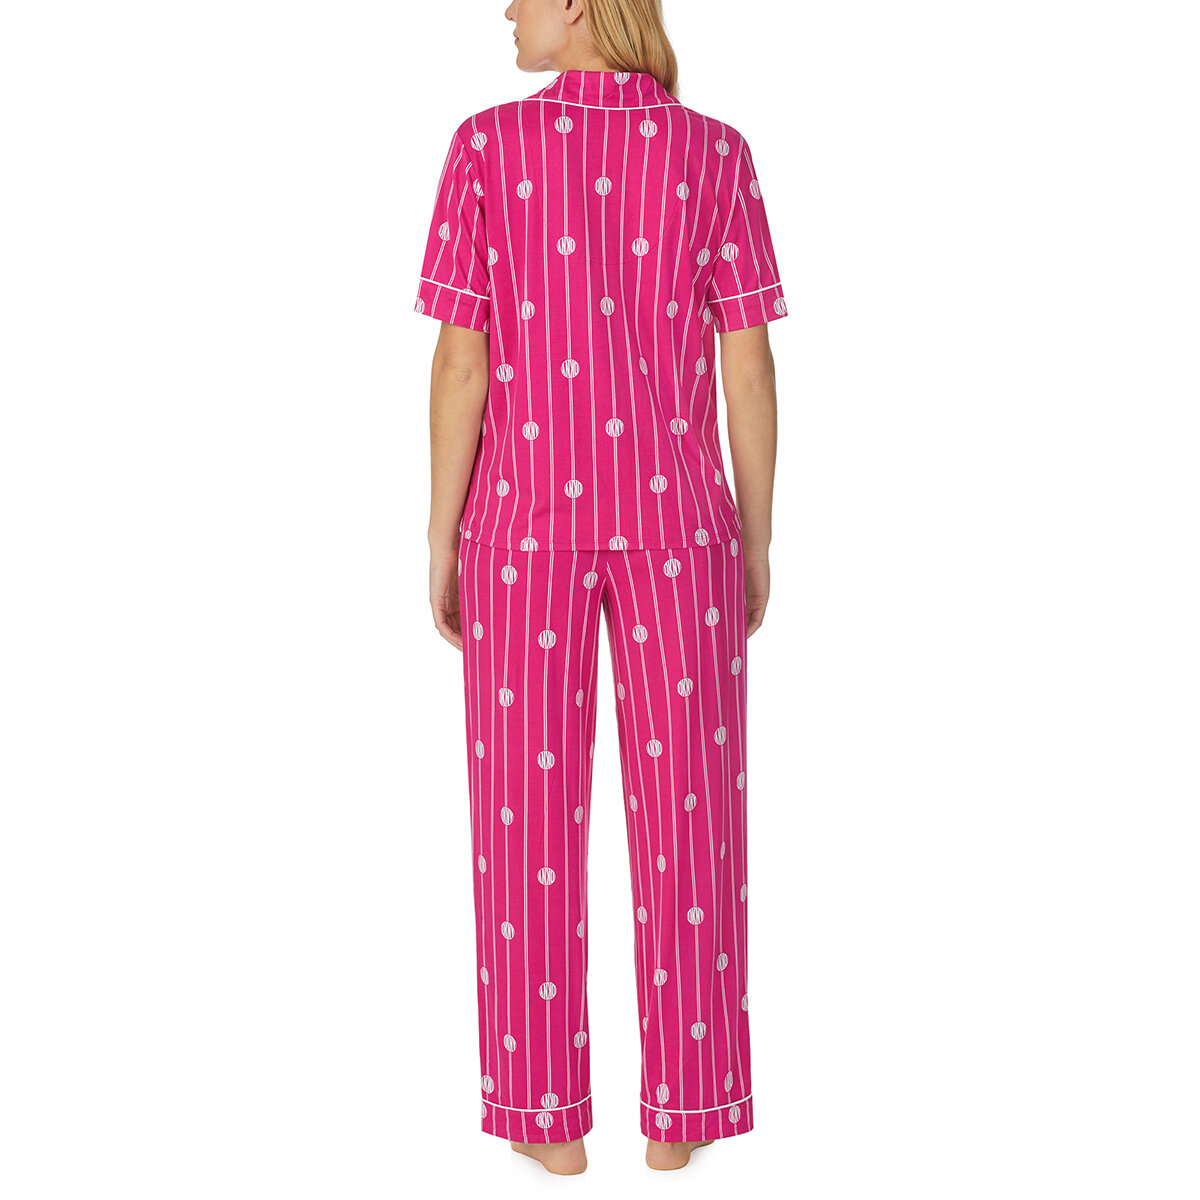 DKNY Notch Collar 3 Piece PJ Set in Pink